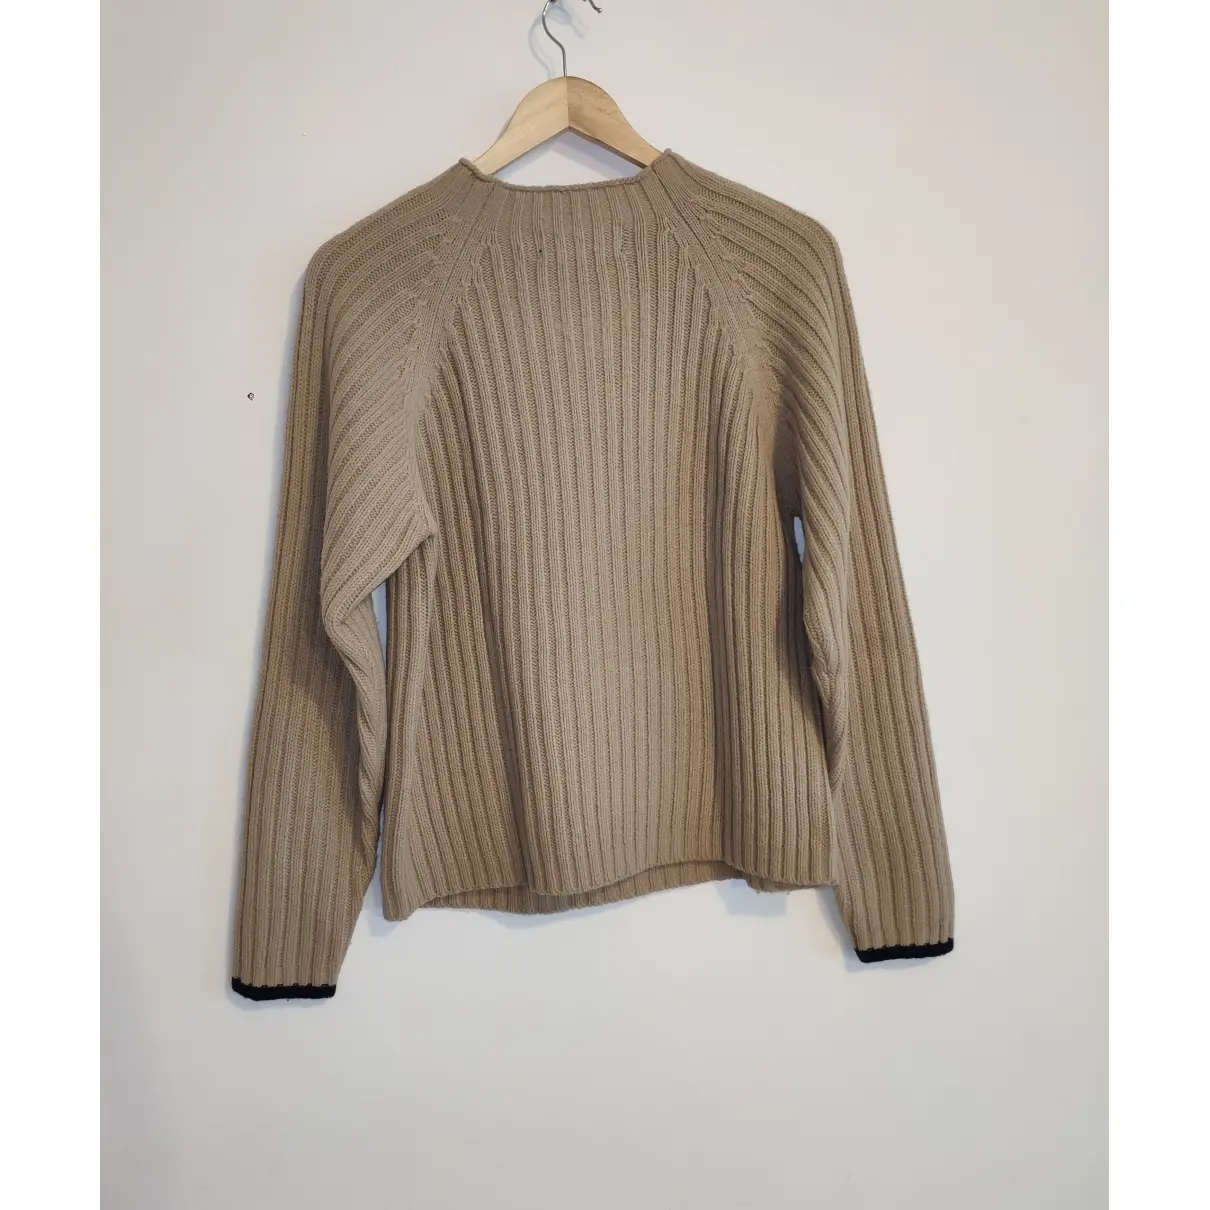 Buy Polo Ralph Lauren Wool jumper online - Vintage